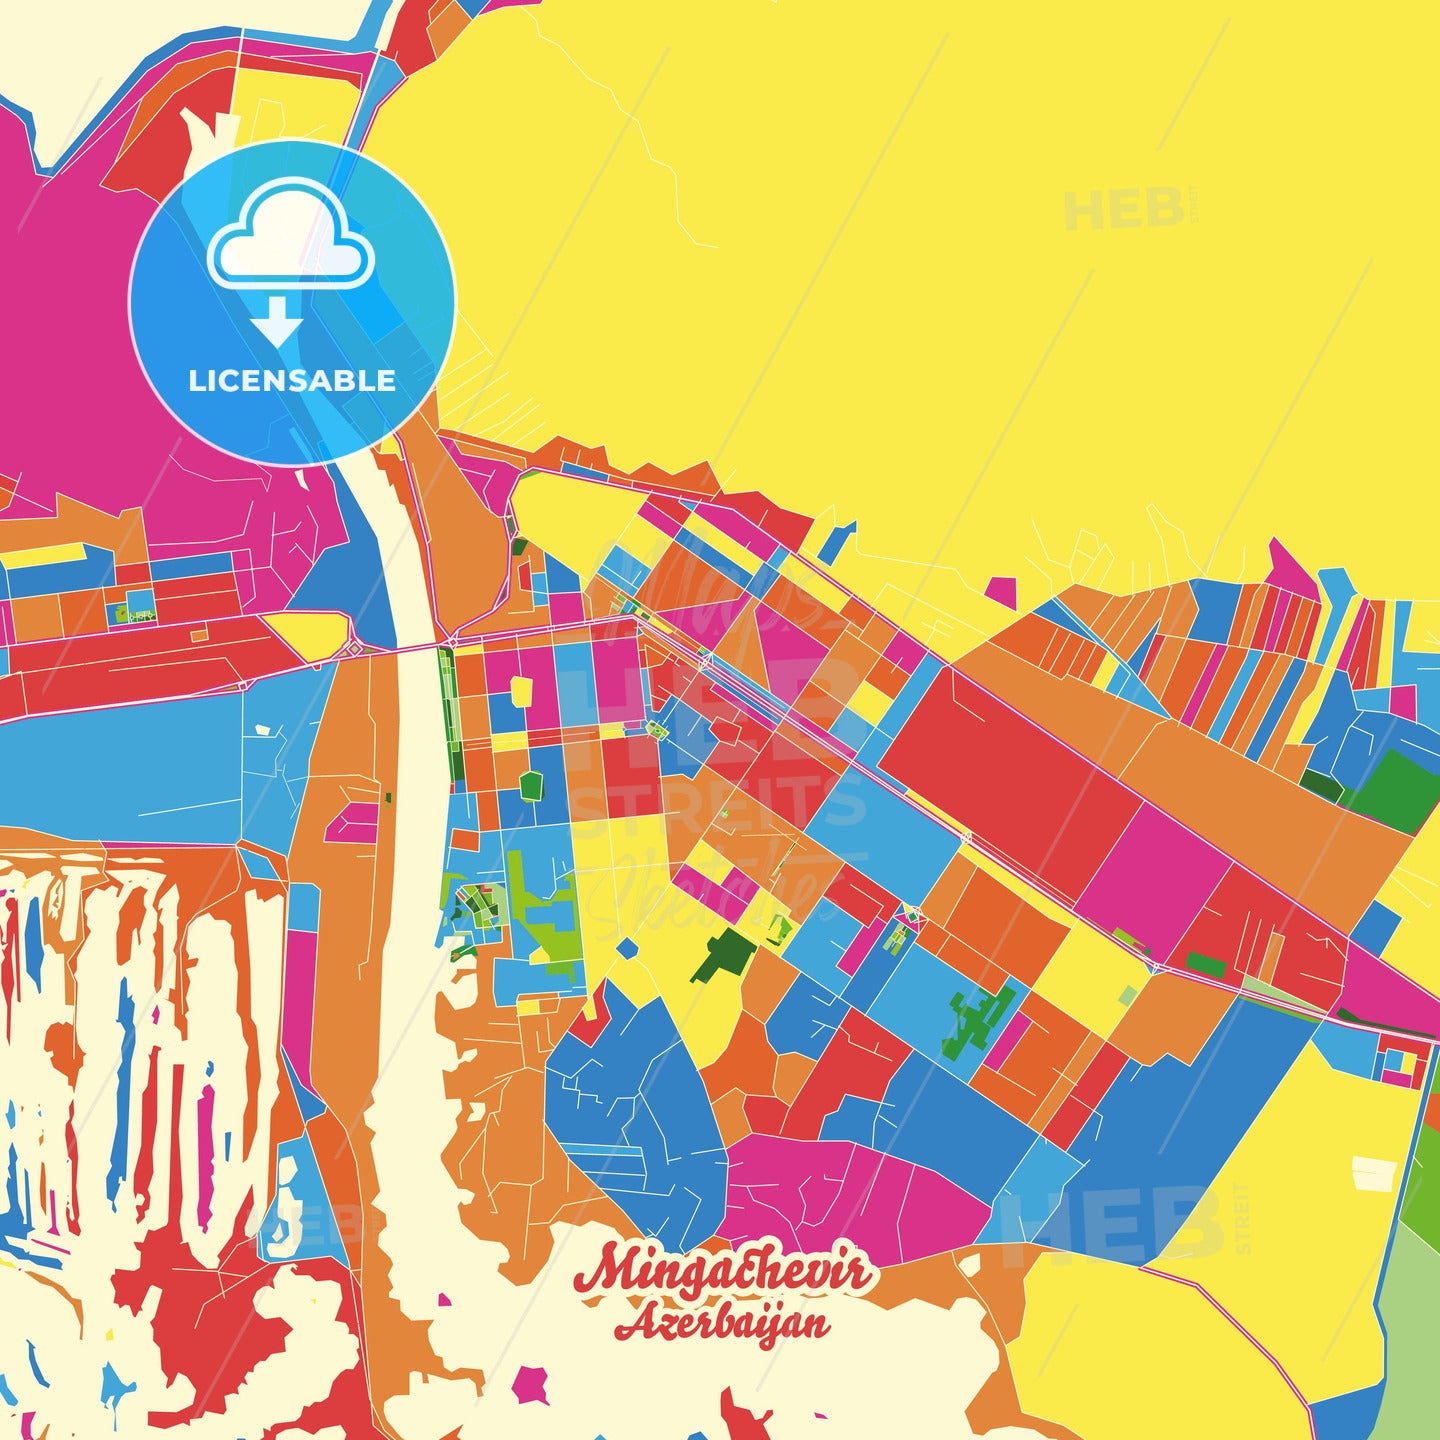 Mingachevir, Azerbaijan Crazy Colorful Street Map Poster Template - HEBSTREITS Sketches